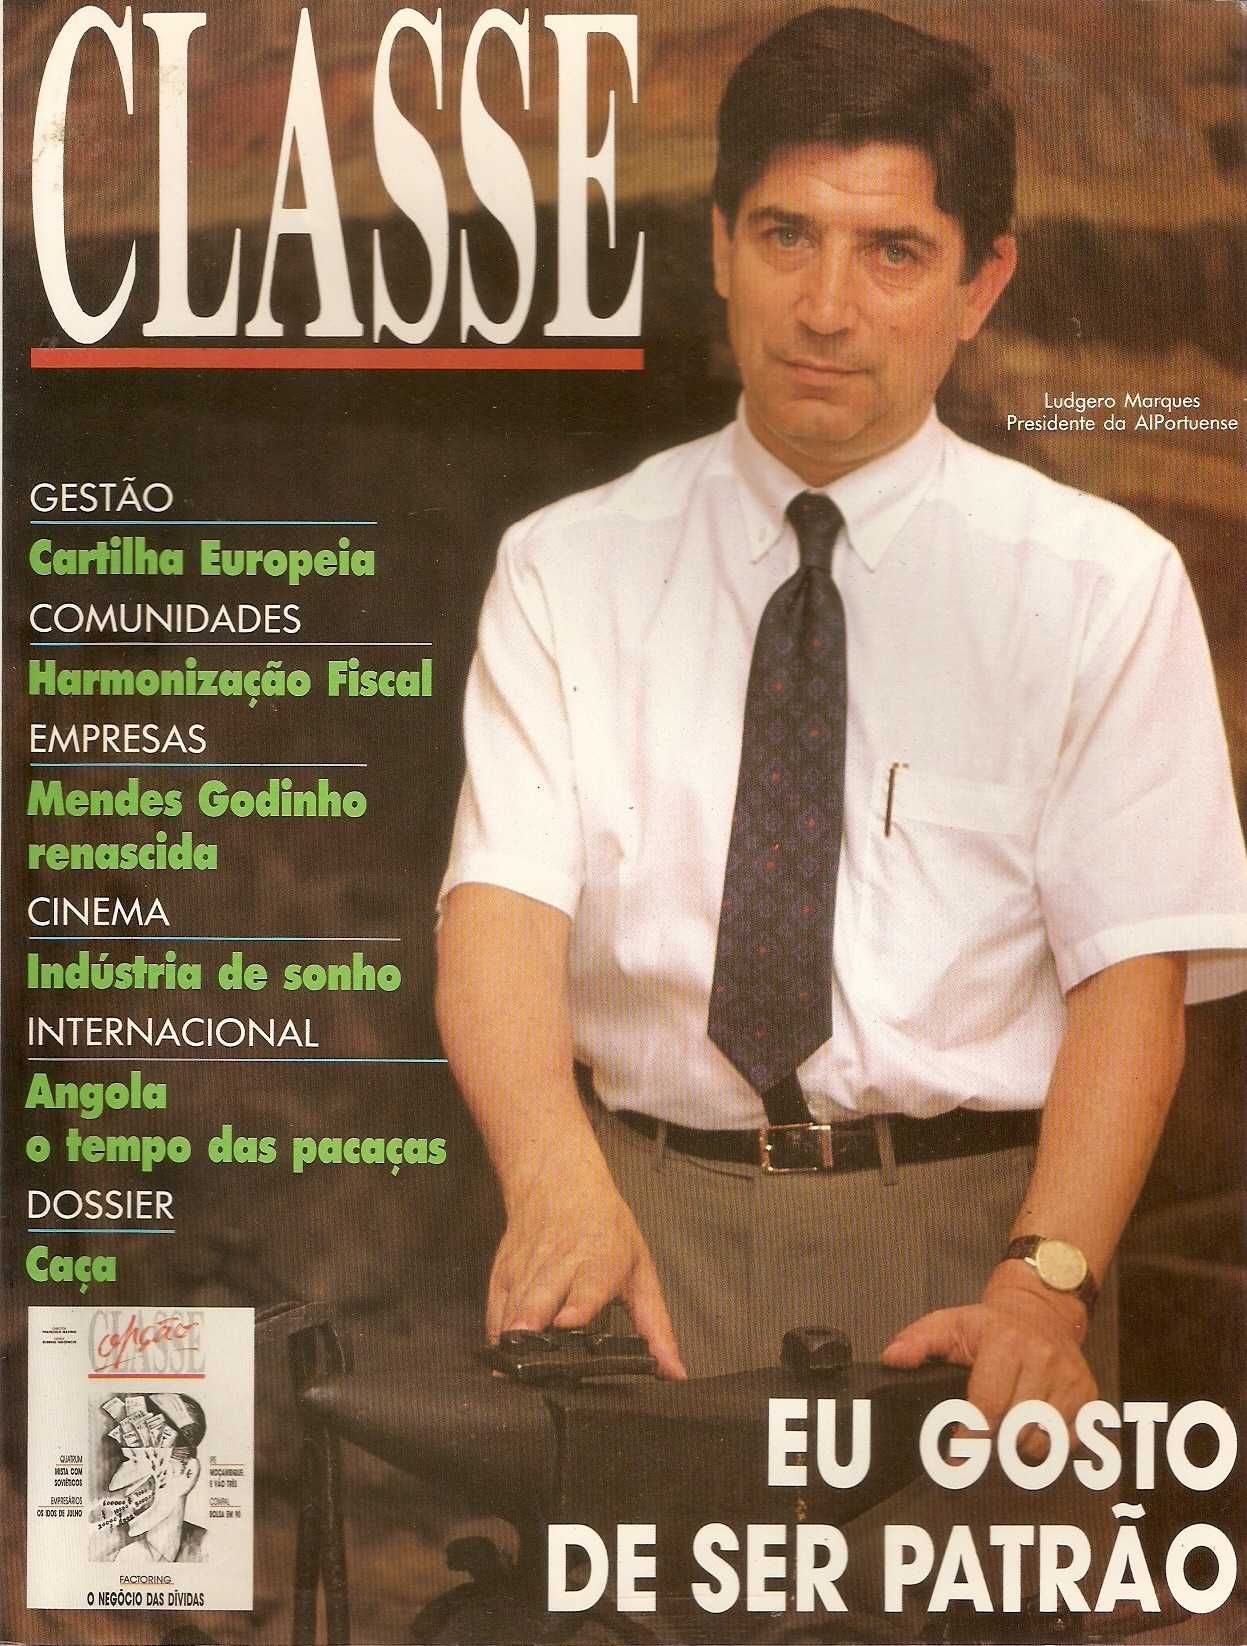 Ludgero Marques na revista Classe de 1989